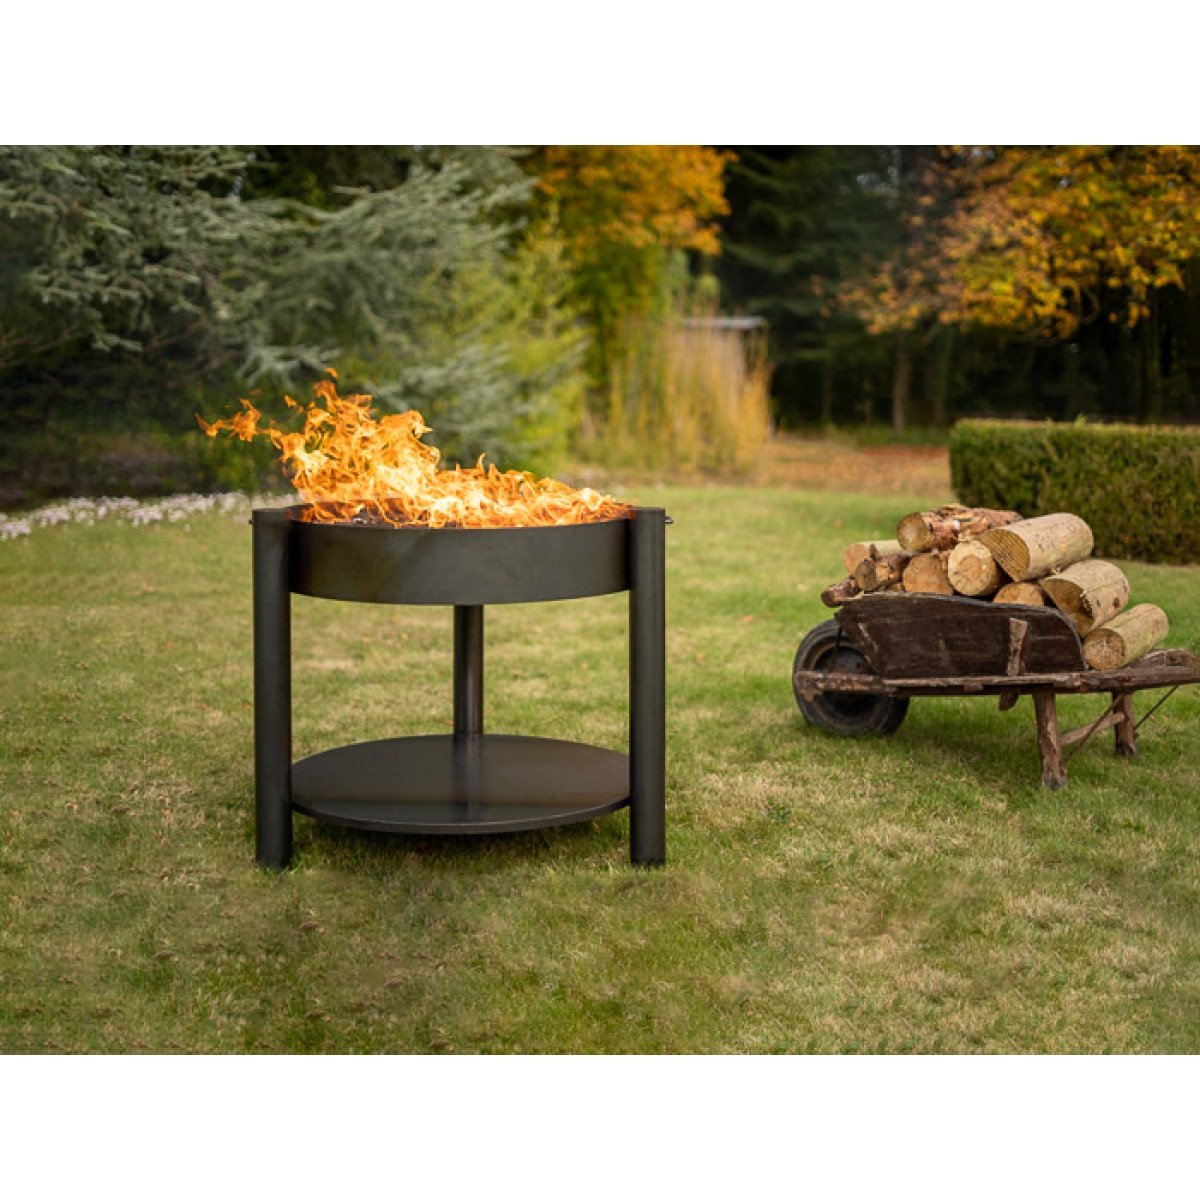 grand brasero barbecue plancha avec des flammes dans jardin